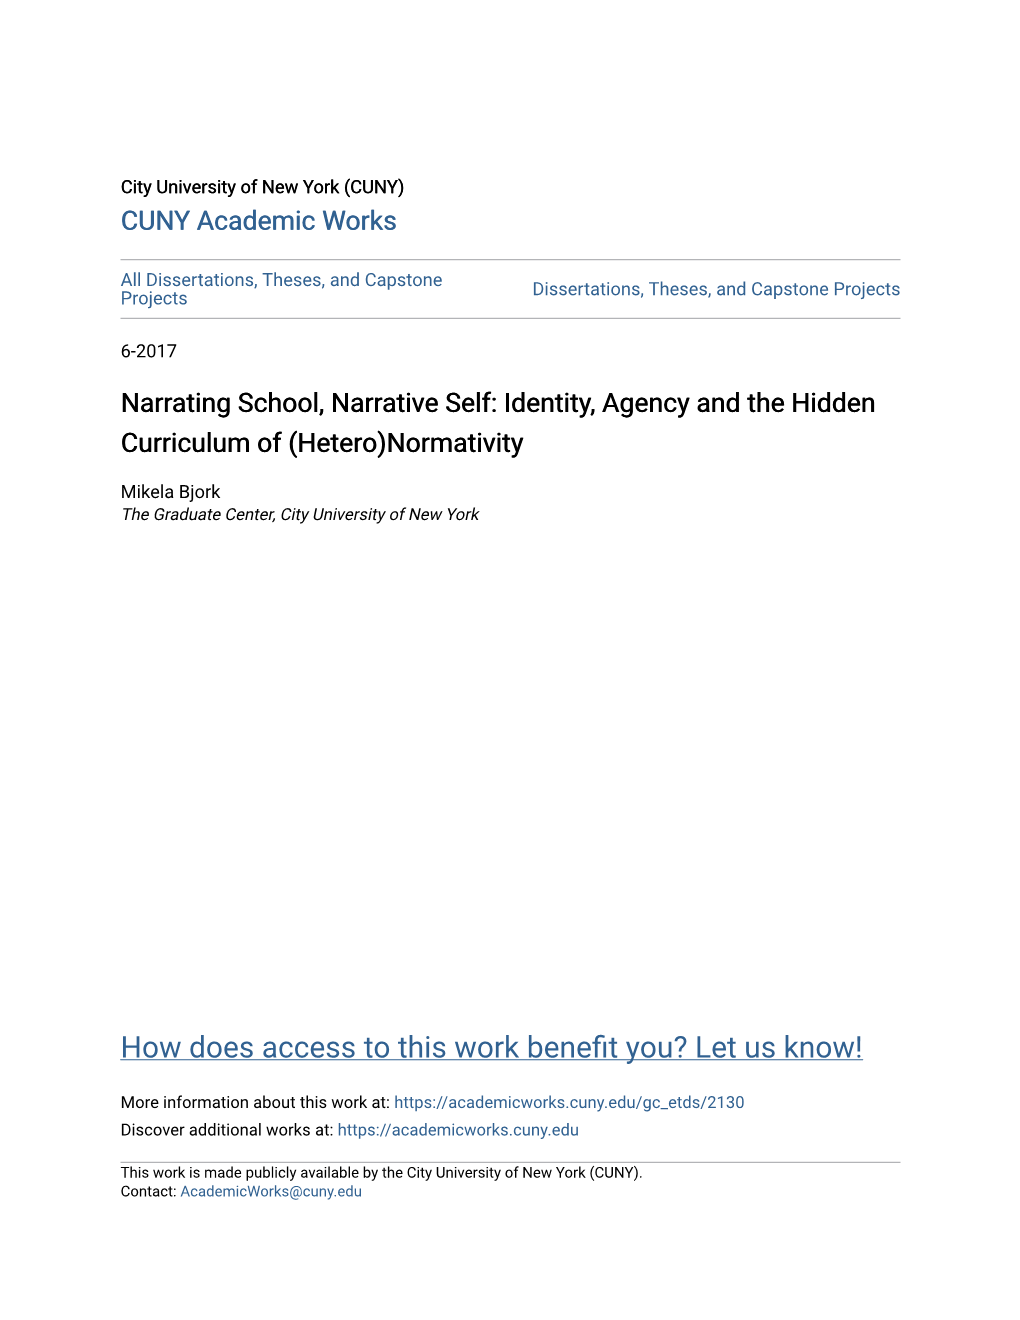 Narrating School, Narrative Self: Identity, Agency and the Hidden Curriculum of (Hetero)Normativity